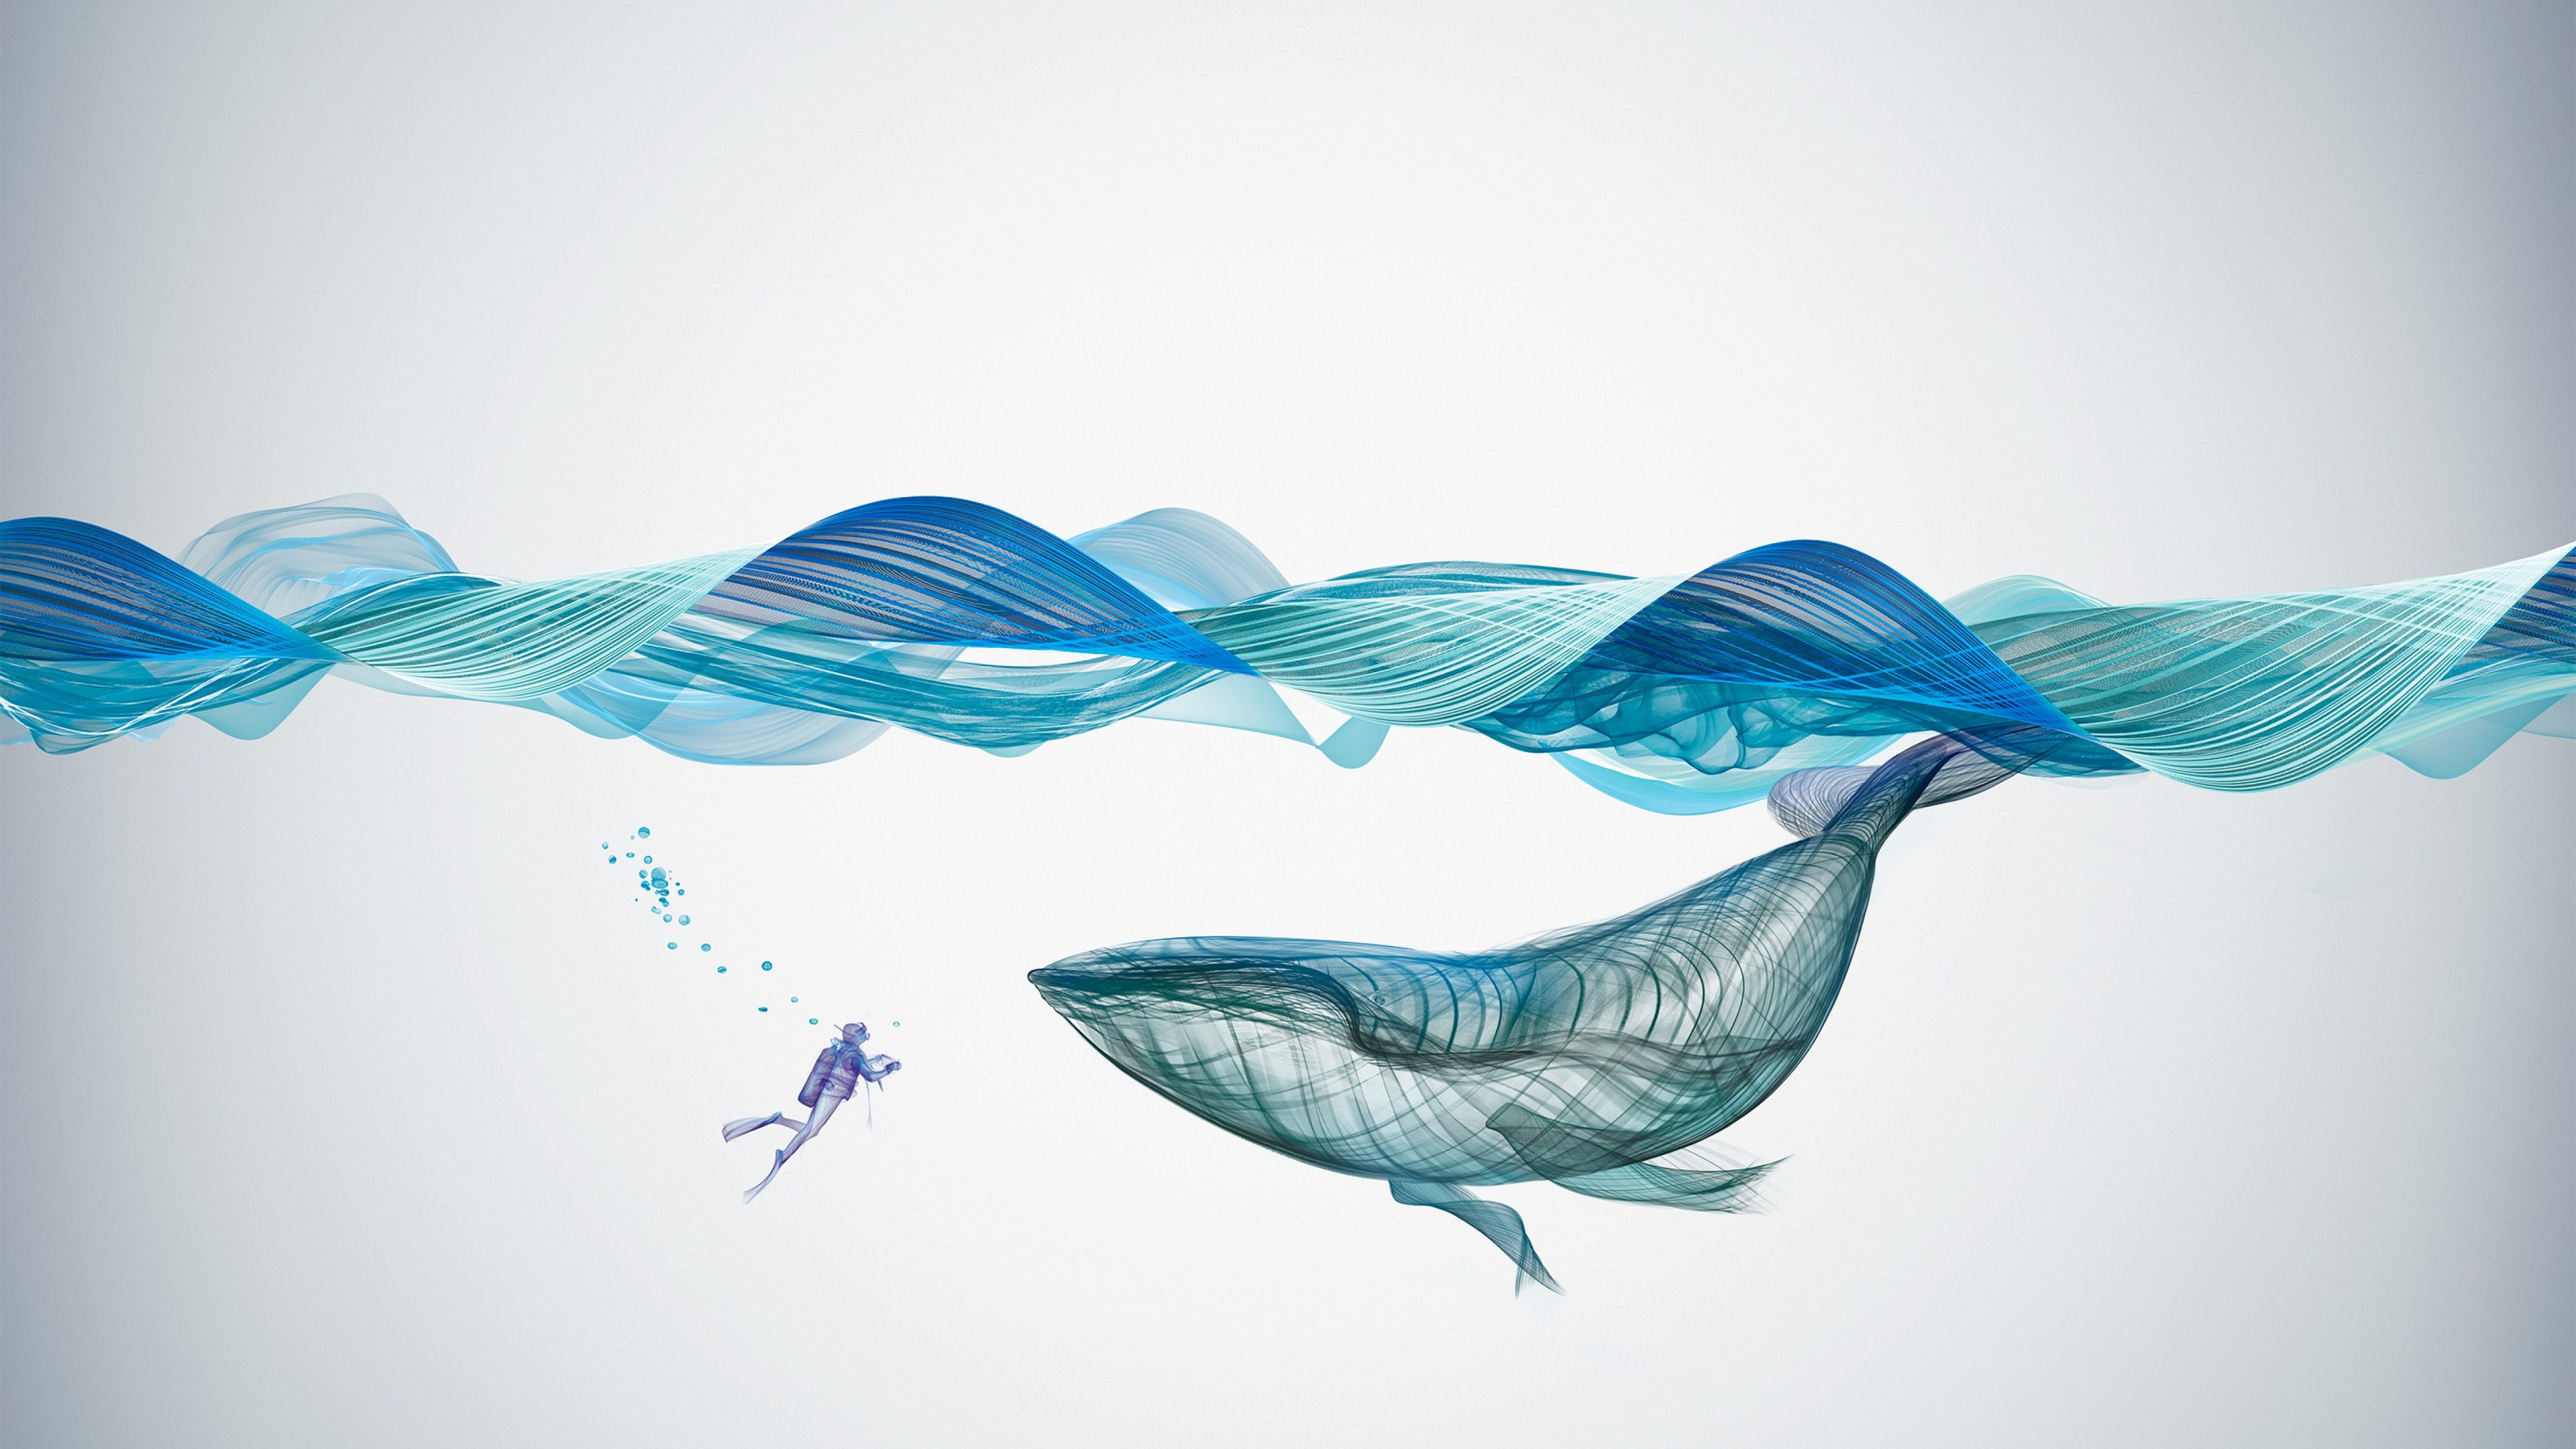 Underwater Whale Digital Art Full HD 1080p Wallpaper Free Download